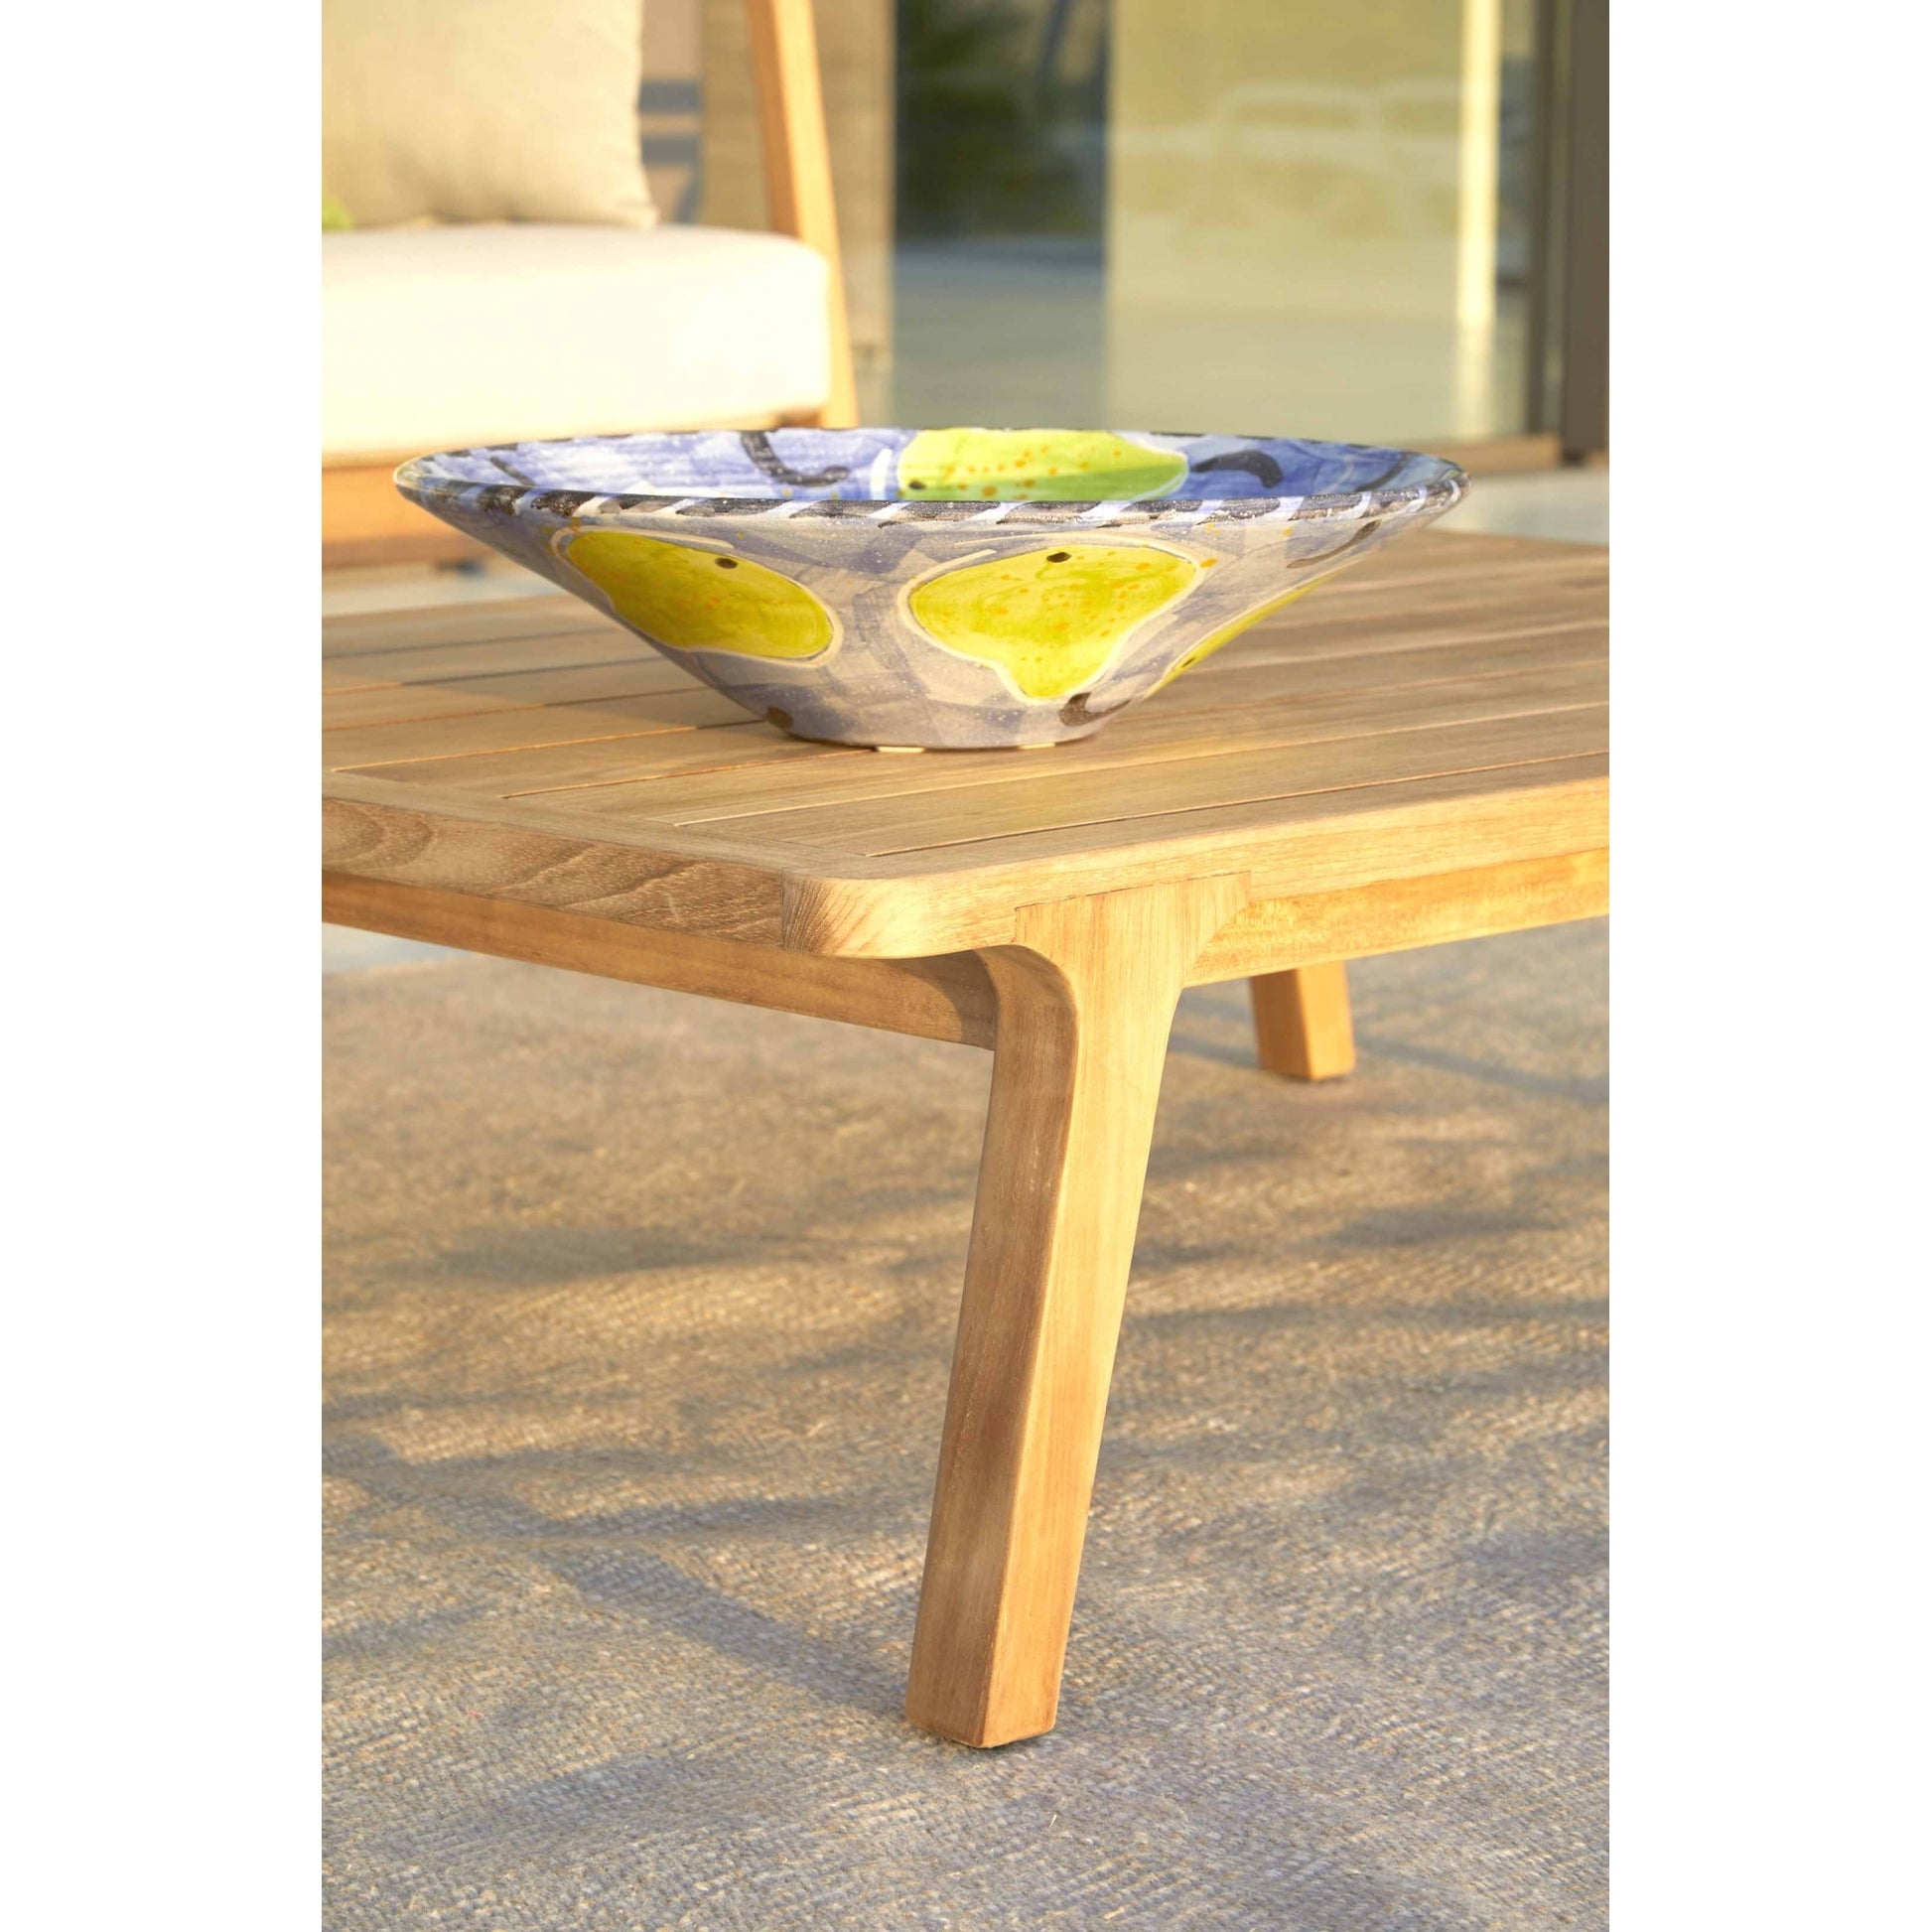 Flexx Side Table - PadioLiving - Flexx Side Table - Outdoor Side Table - PadioLiving